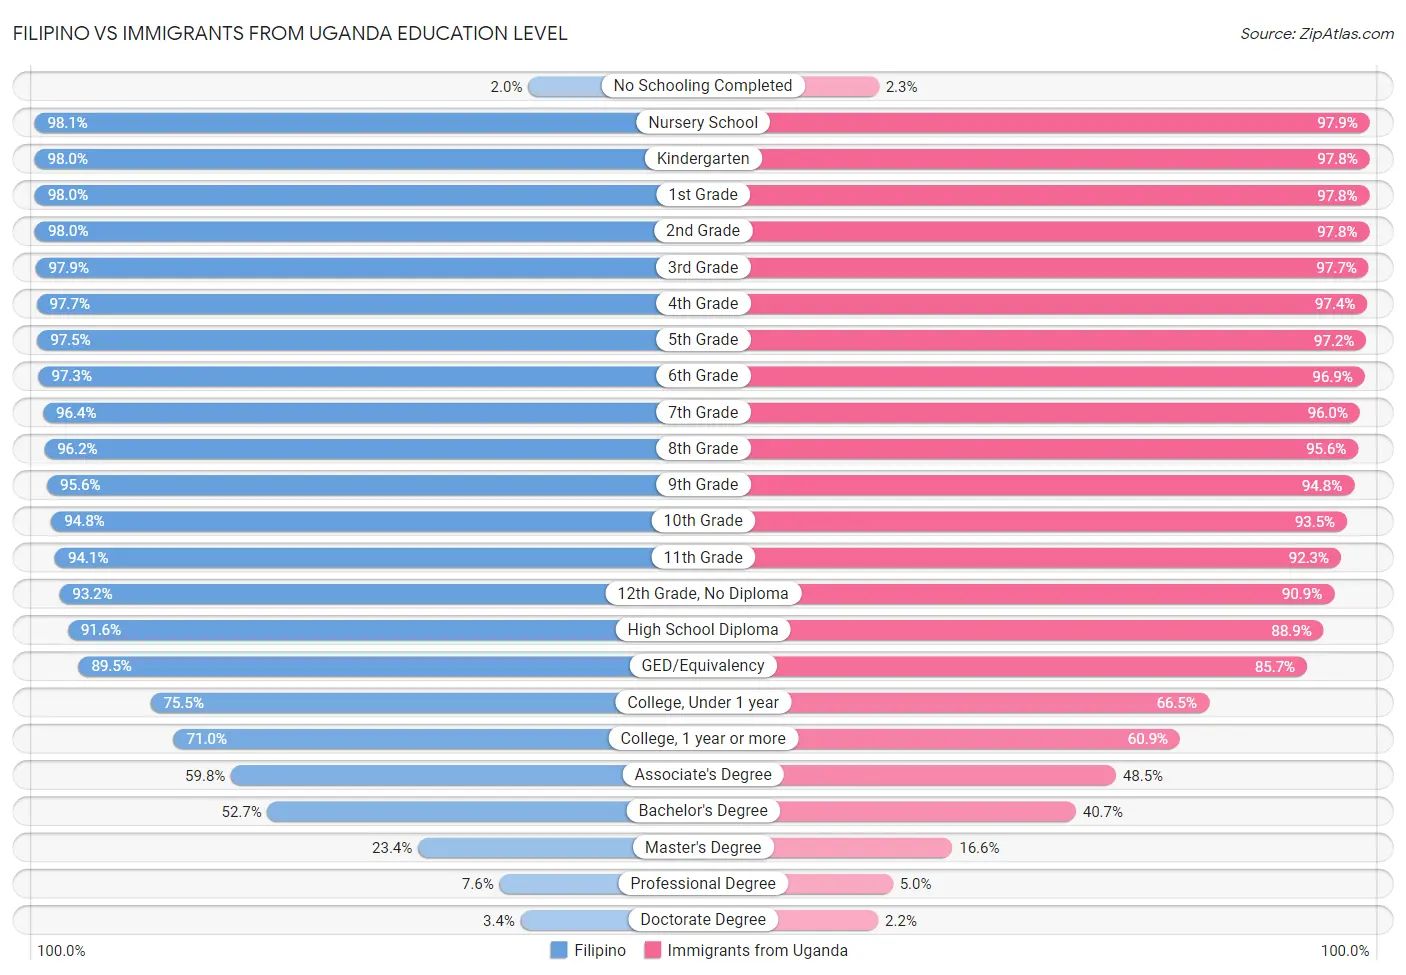 Filipino vs Immigrants from Uganda Education Level